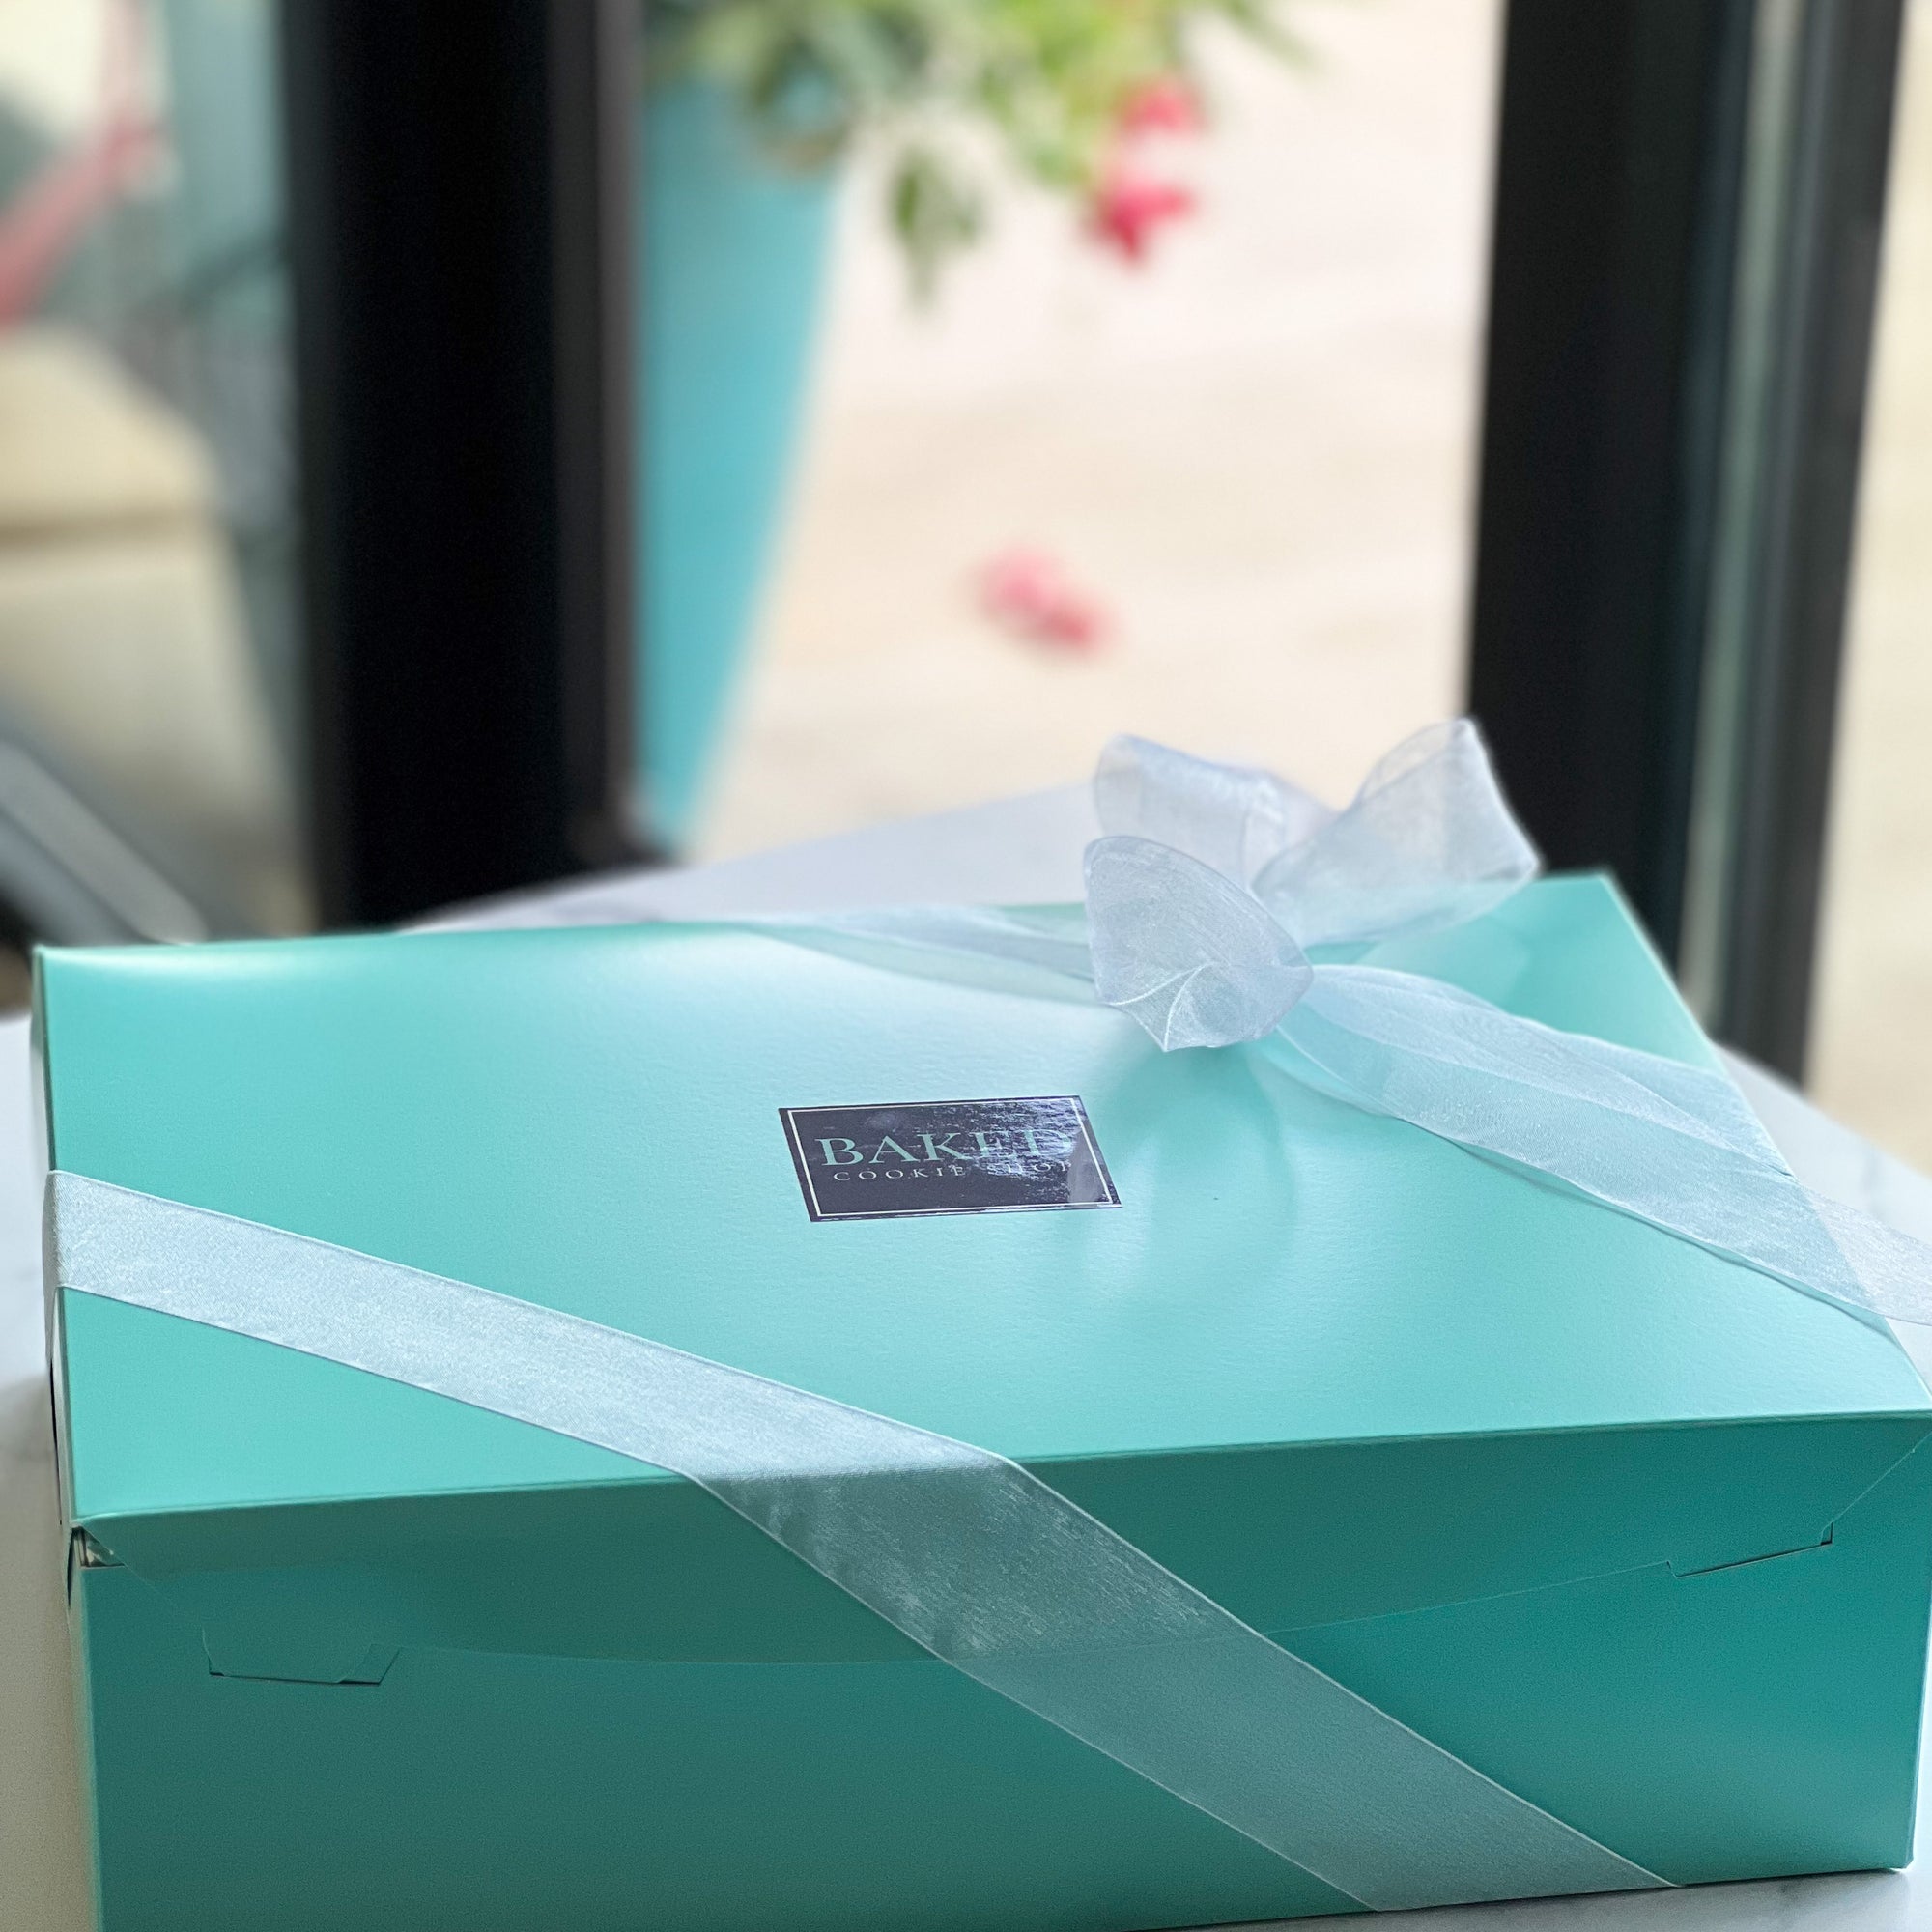 Baked Gift Box #2